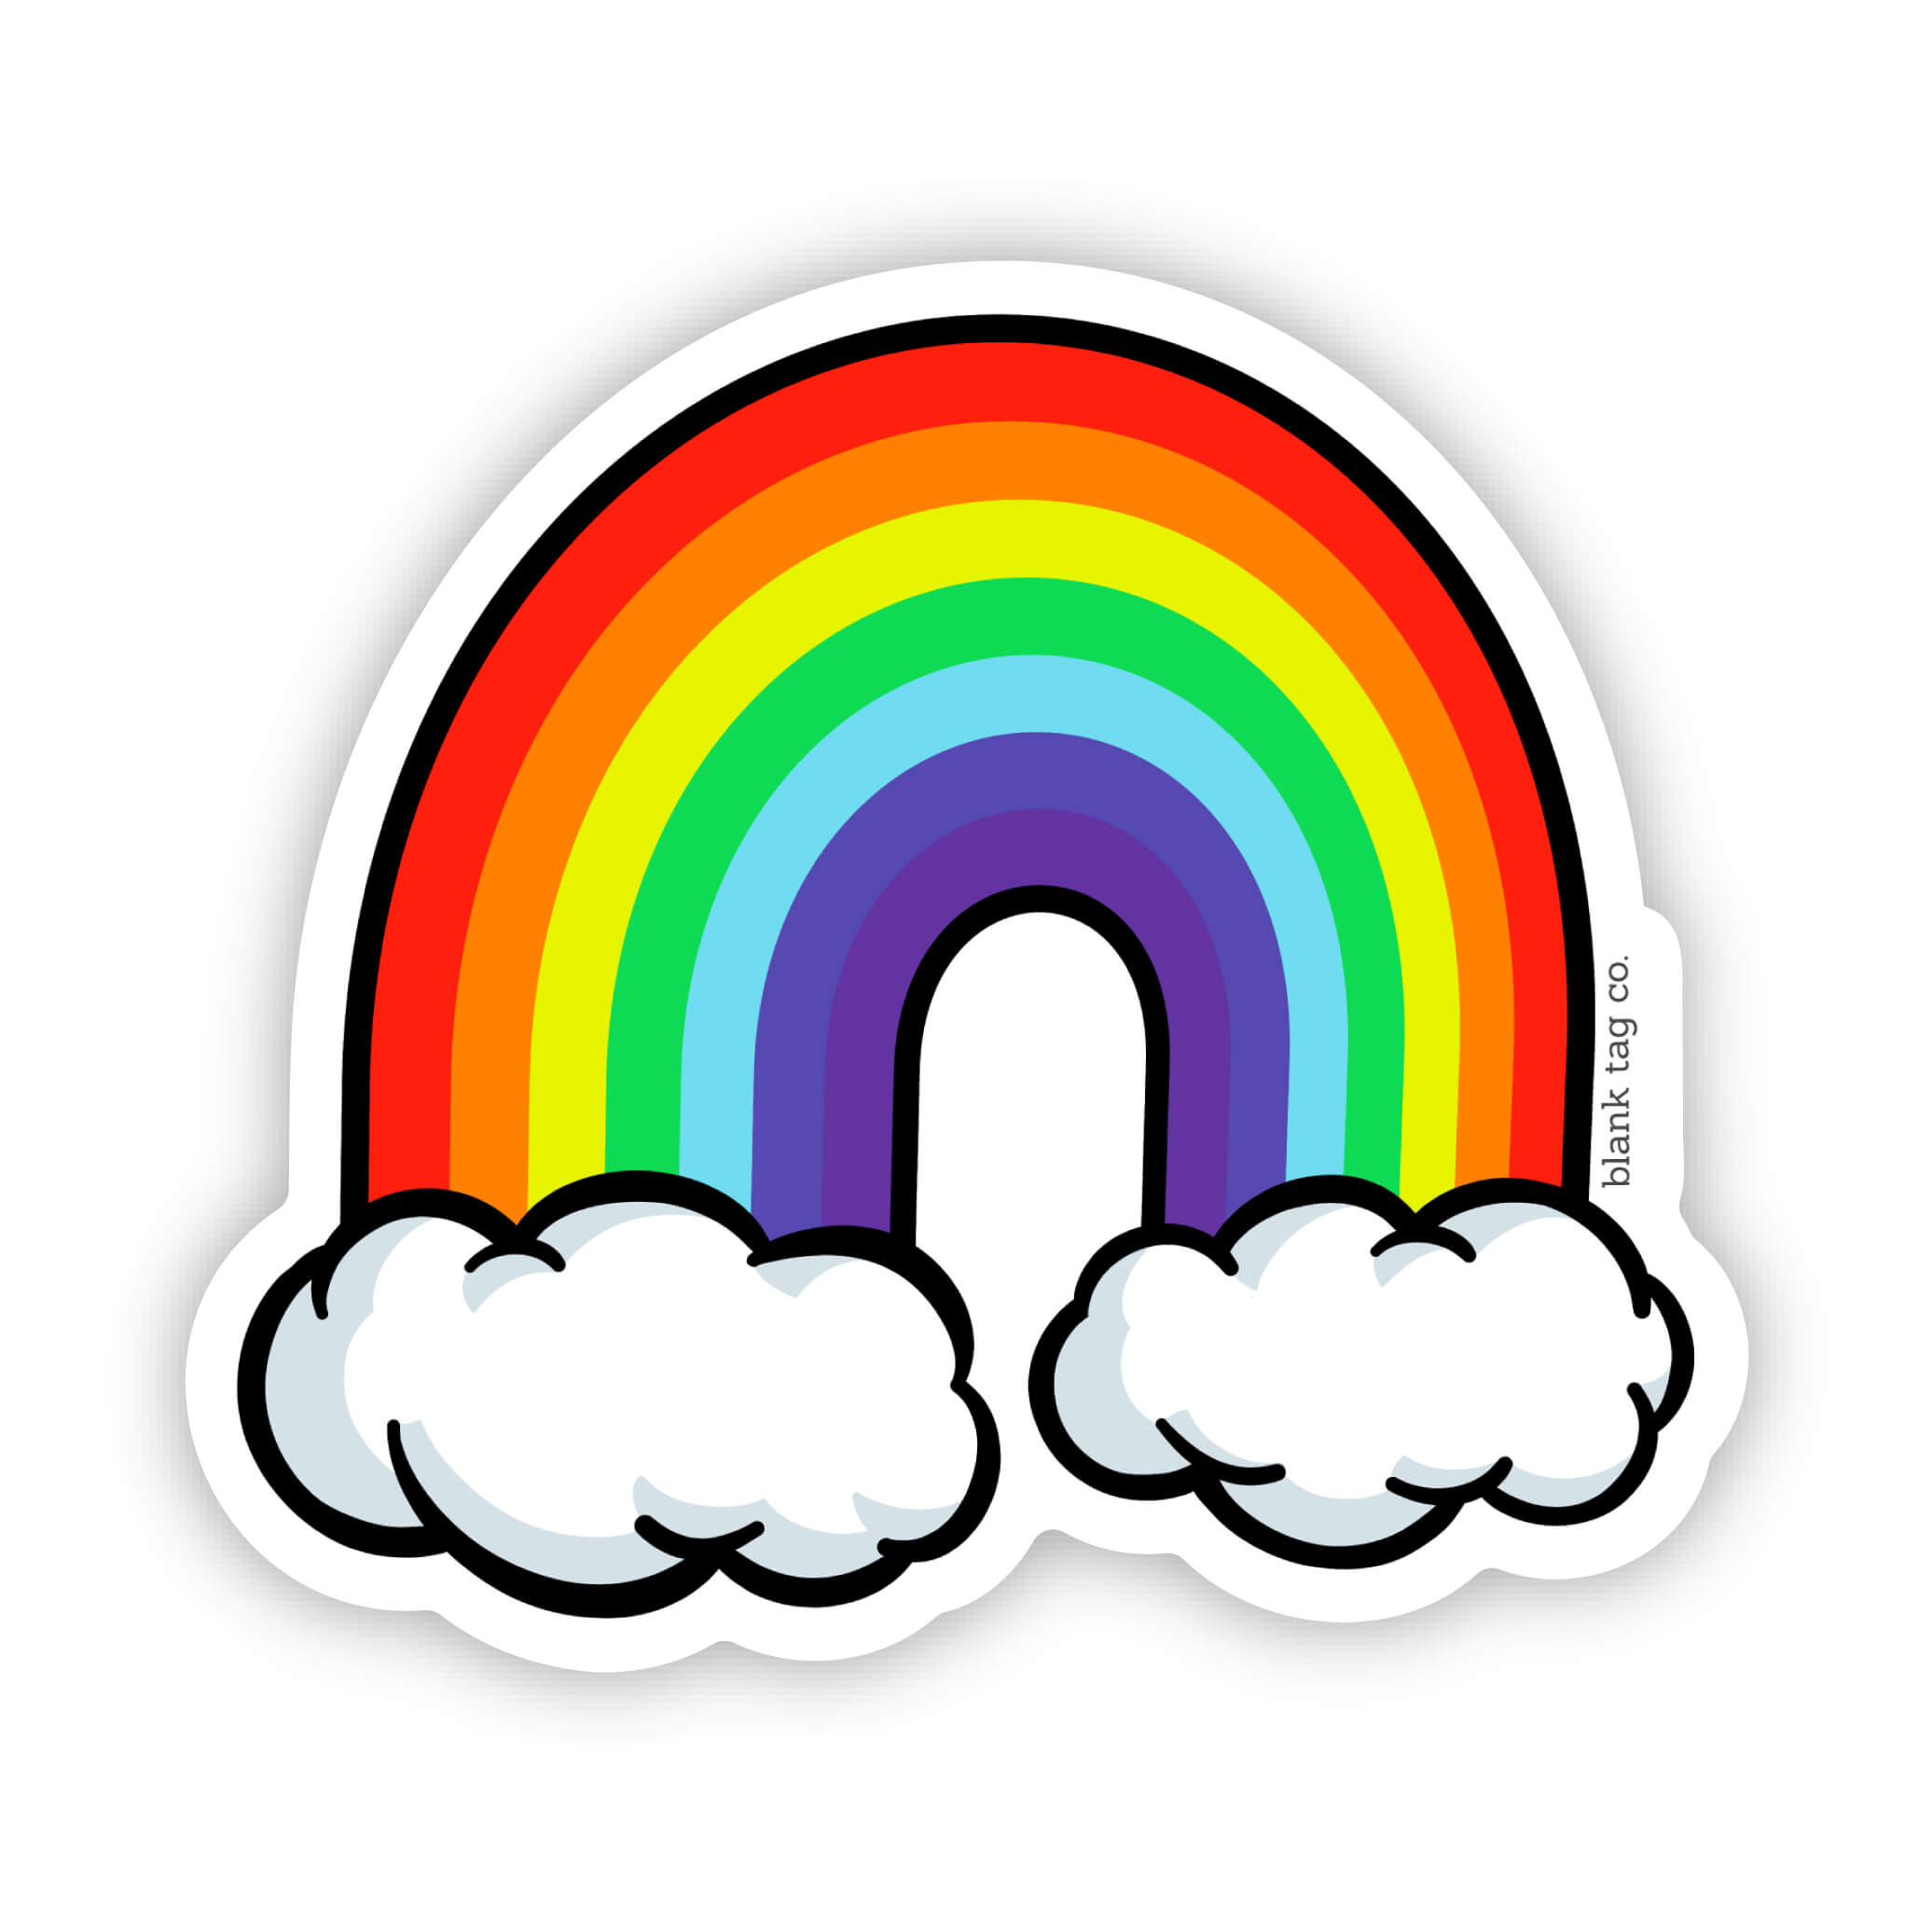 The Rainbow Sticker